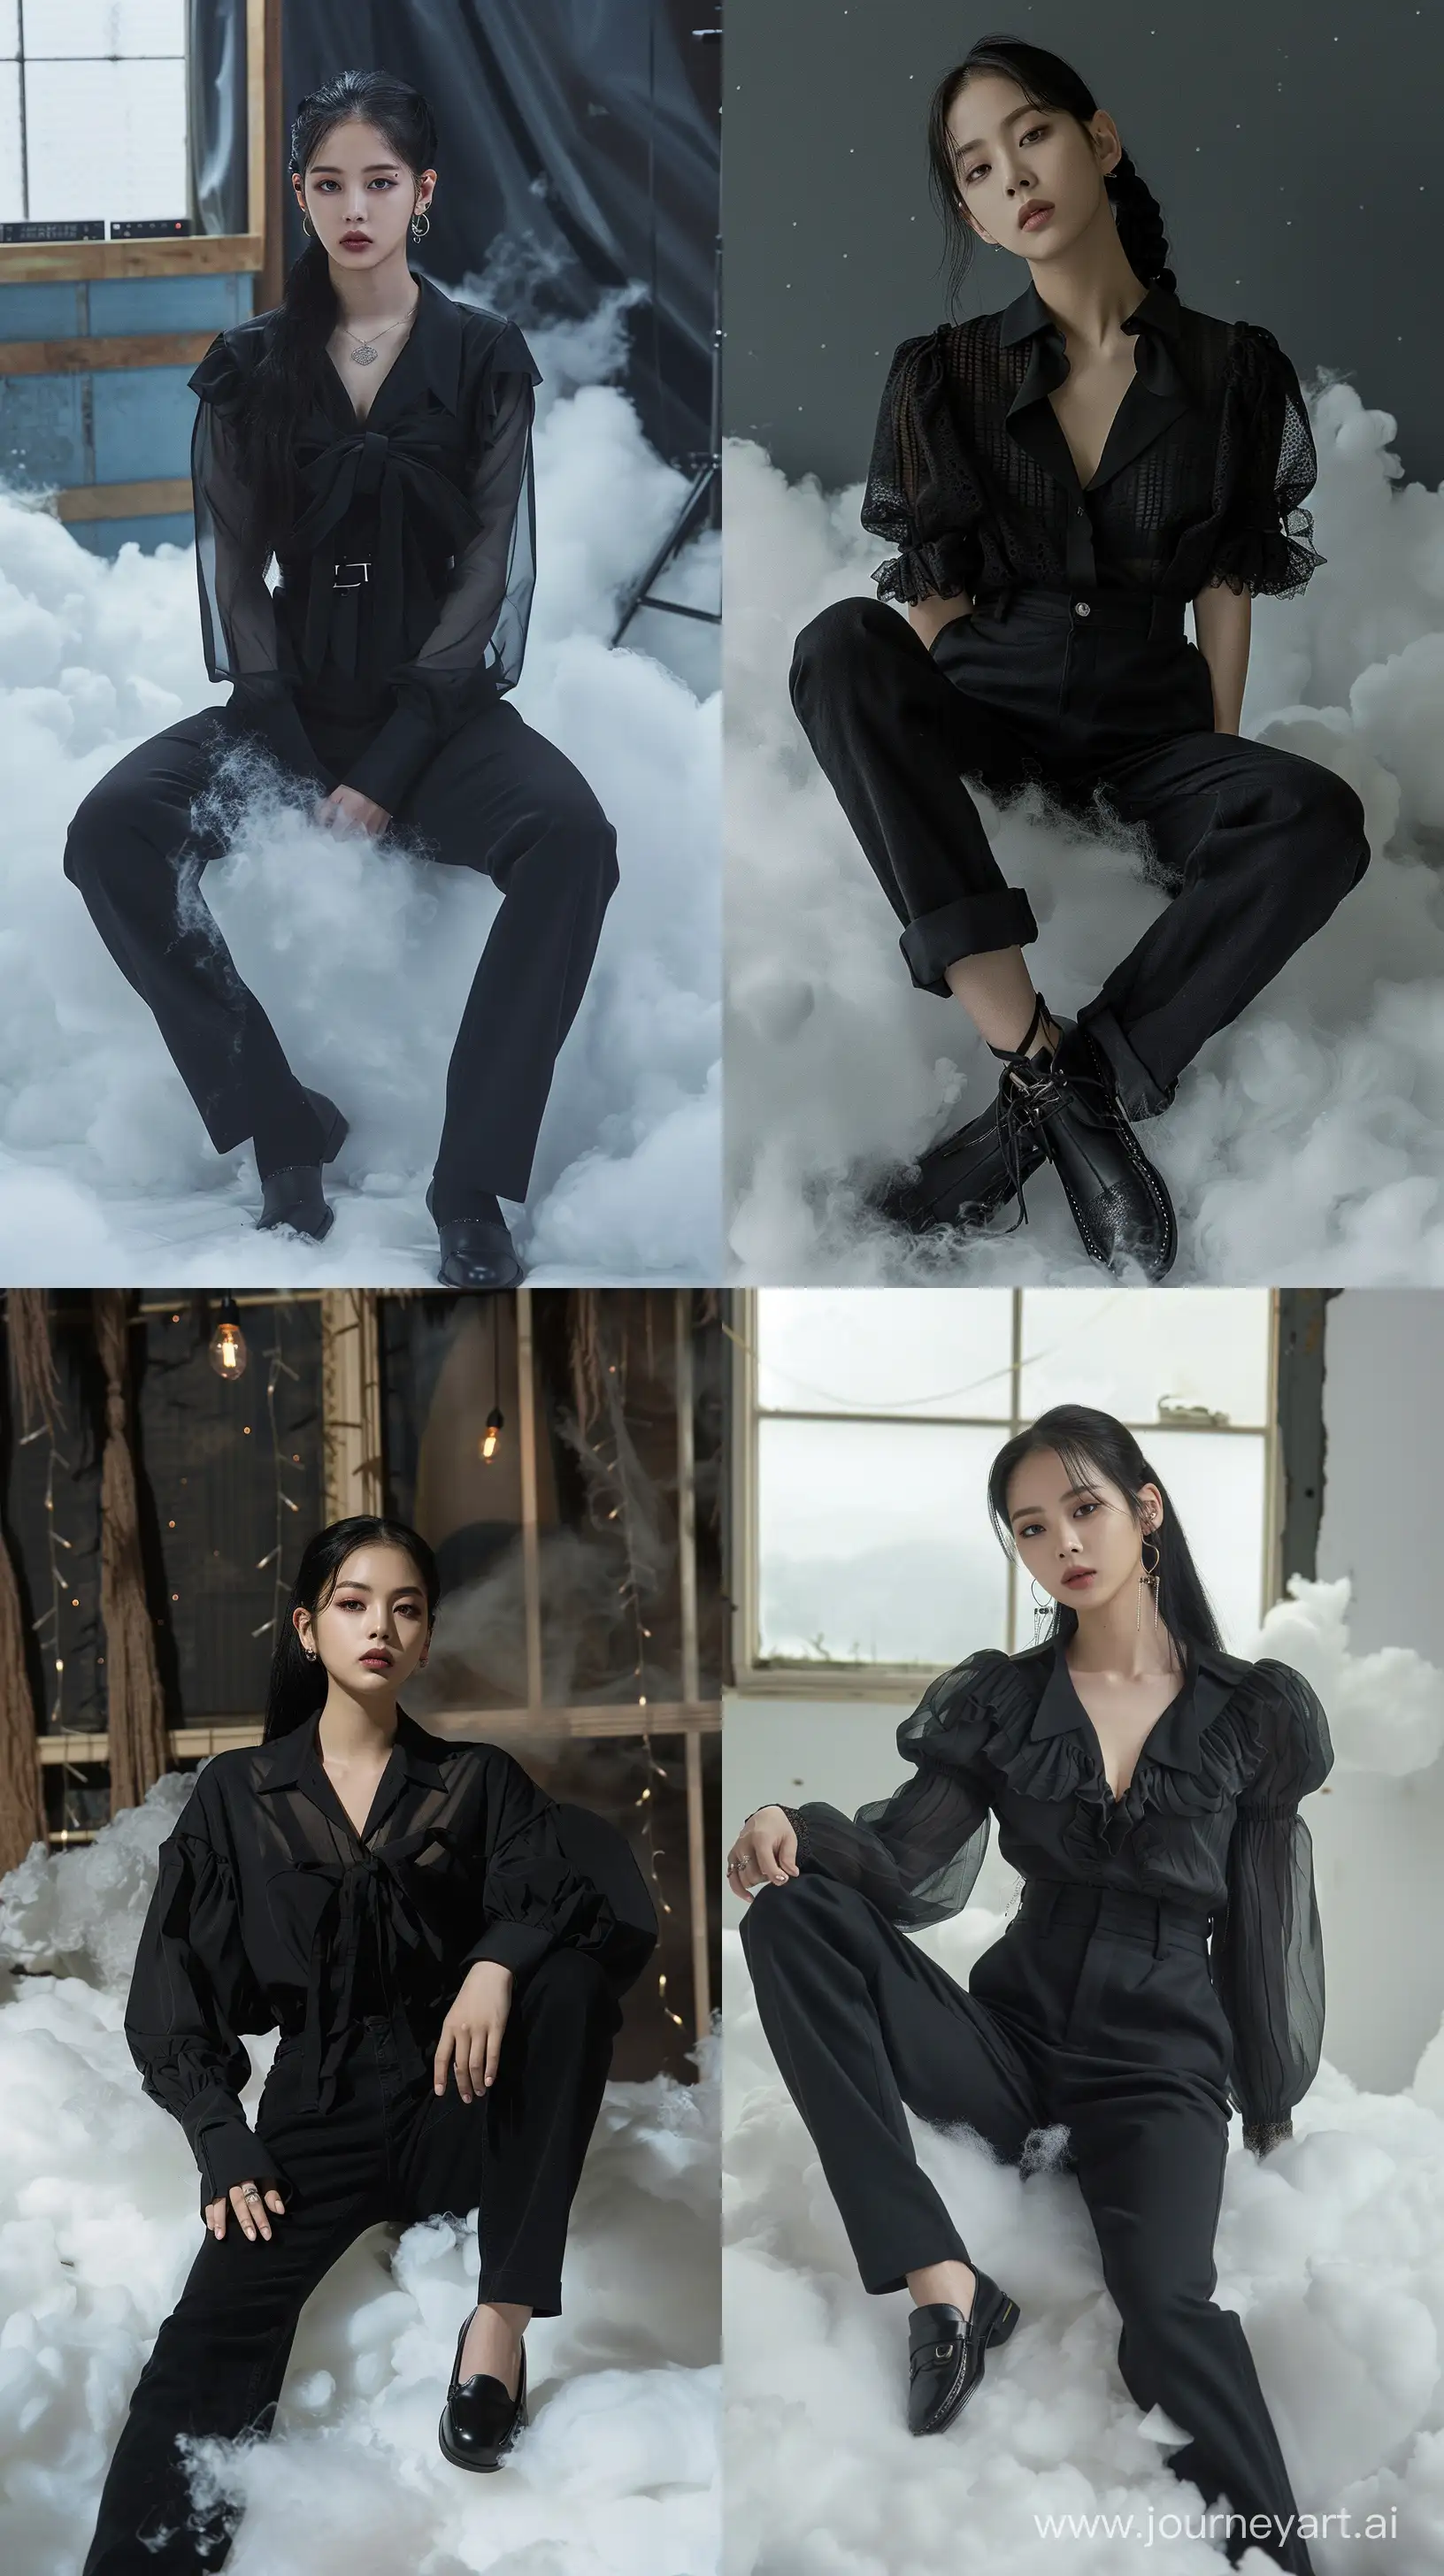 Jennie-Blackpink-Fashion-Portrait-Mysterious-Nocturnal-Minimalism-on-Cloud